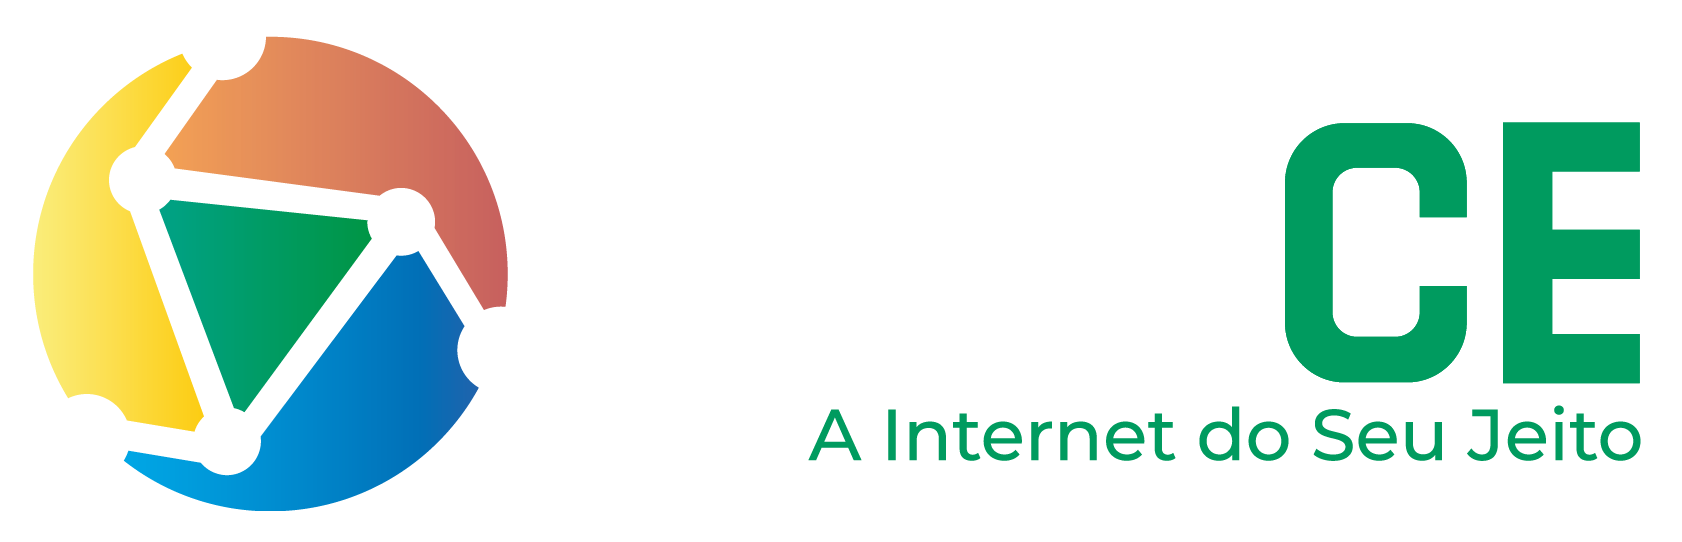 Blog - LINKCE Telecom